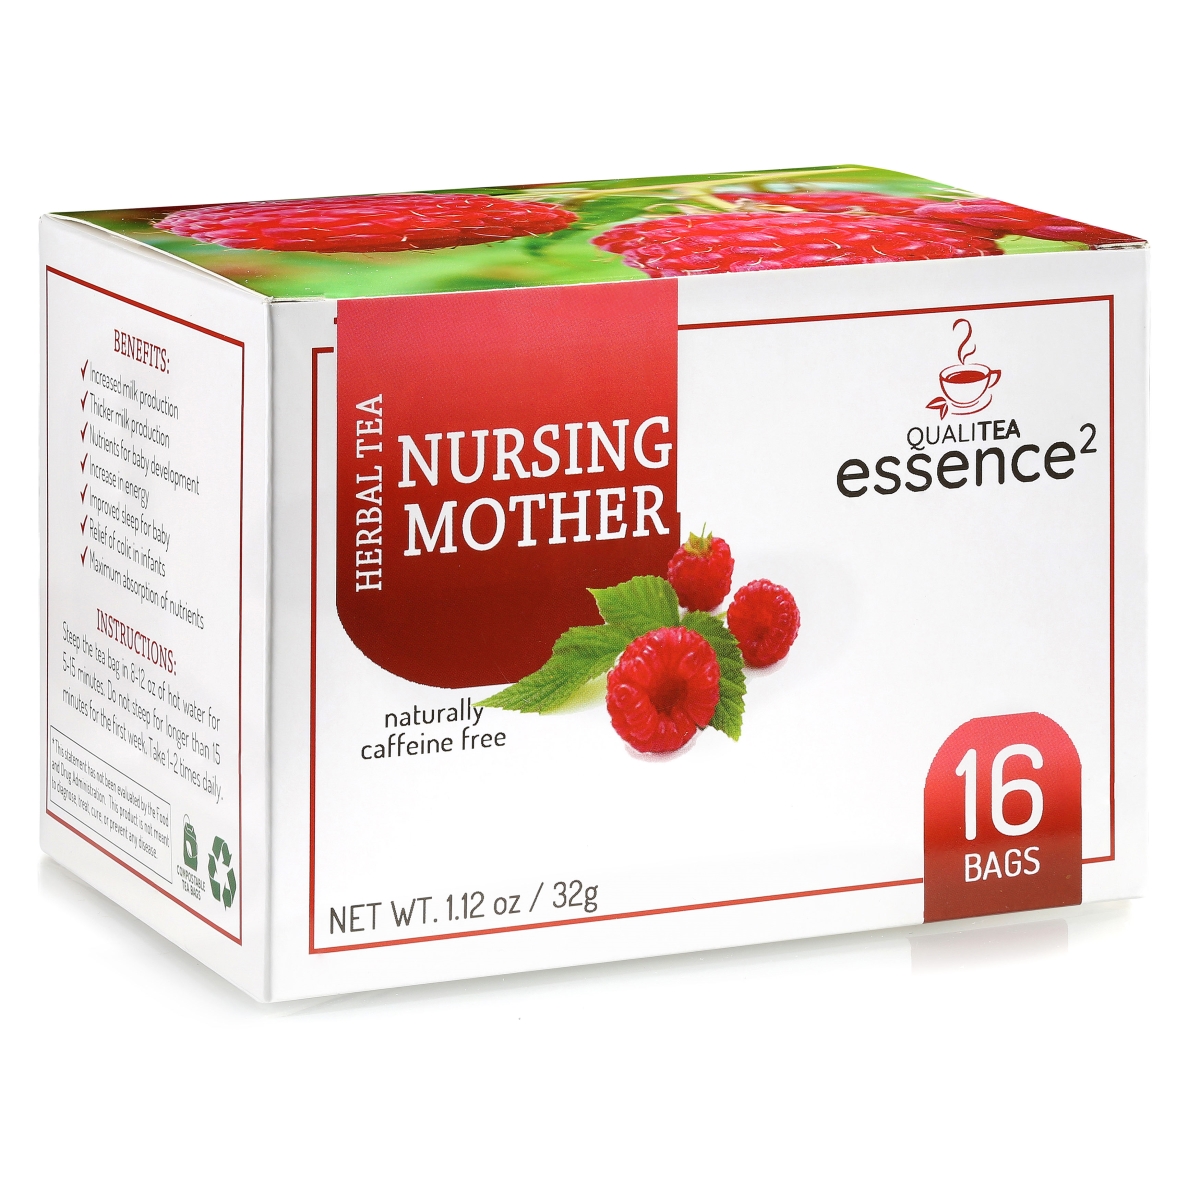 Picture of Qualitea Essence 2 789185572846 Herbal Tea for Nursing Mother